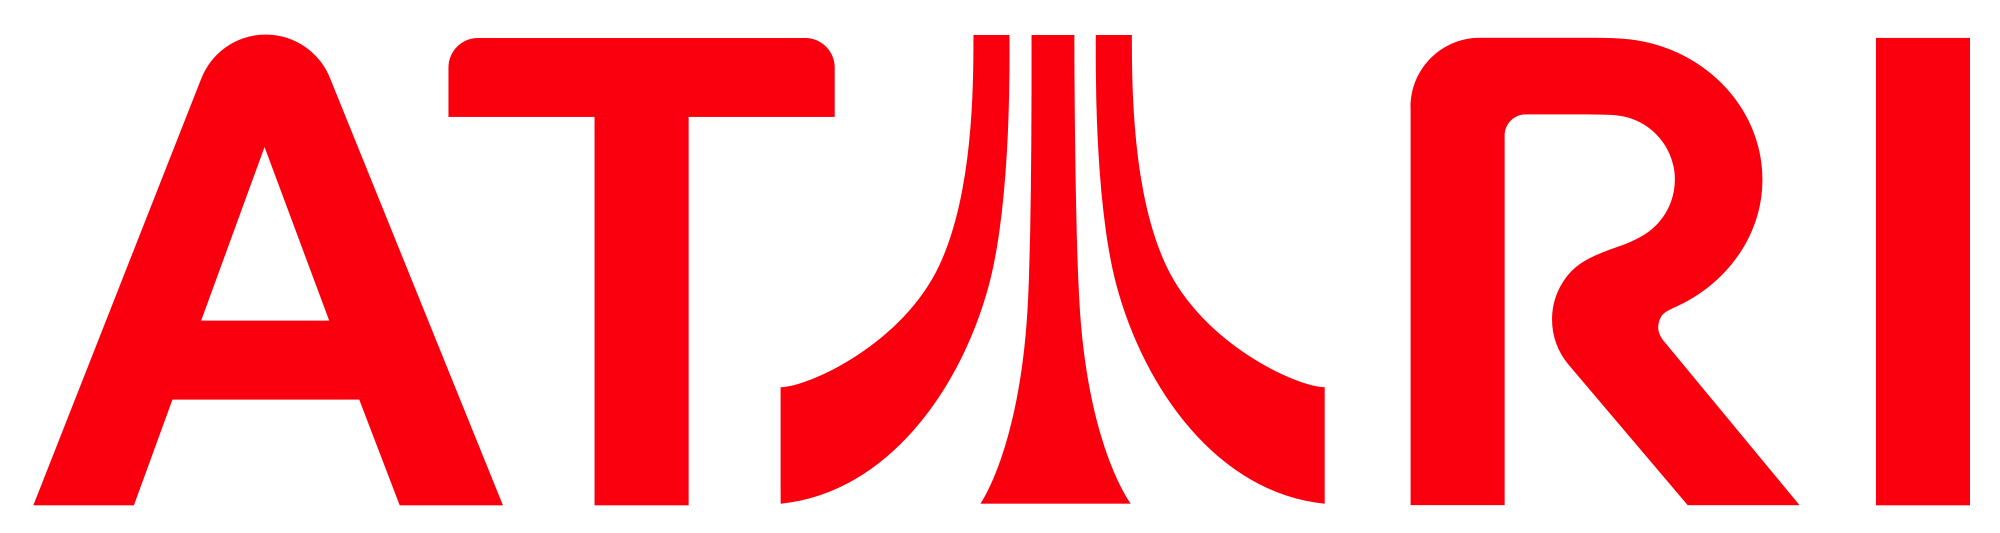 Atari Logo 05 by DHLarson Plu